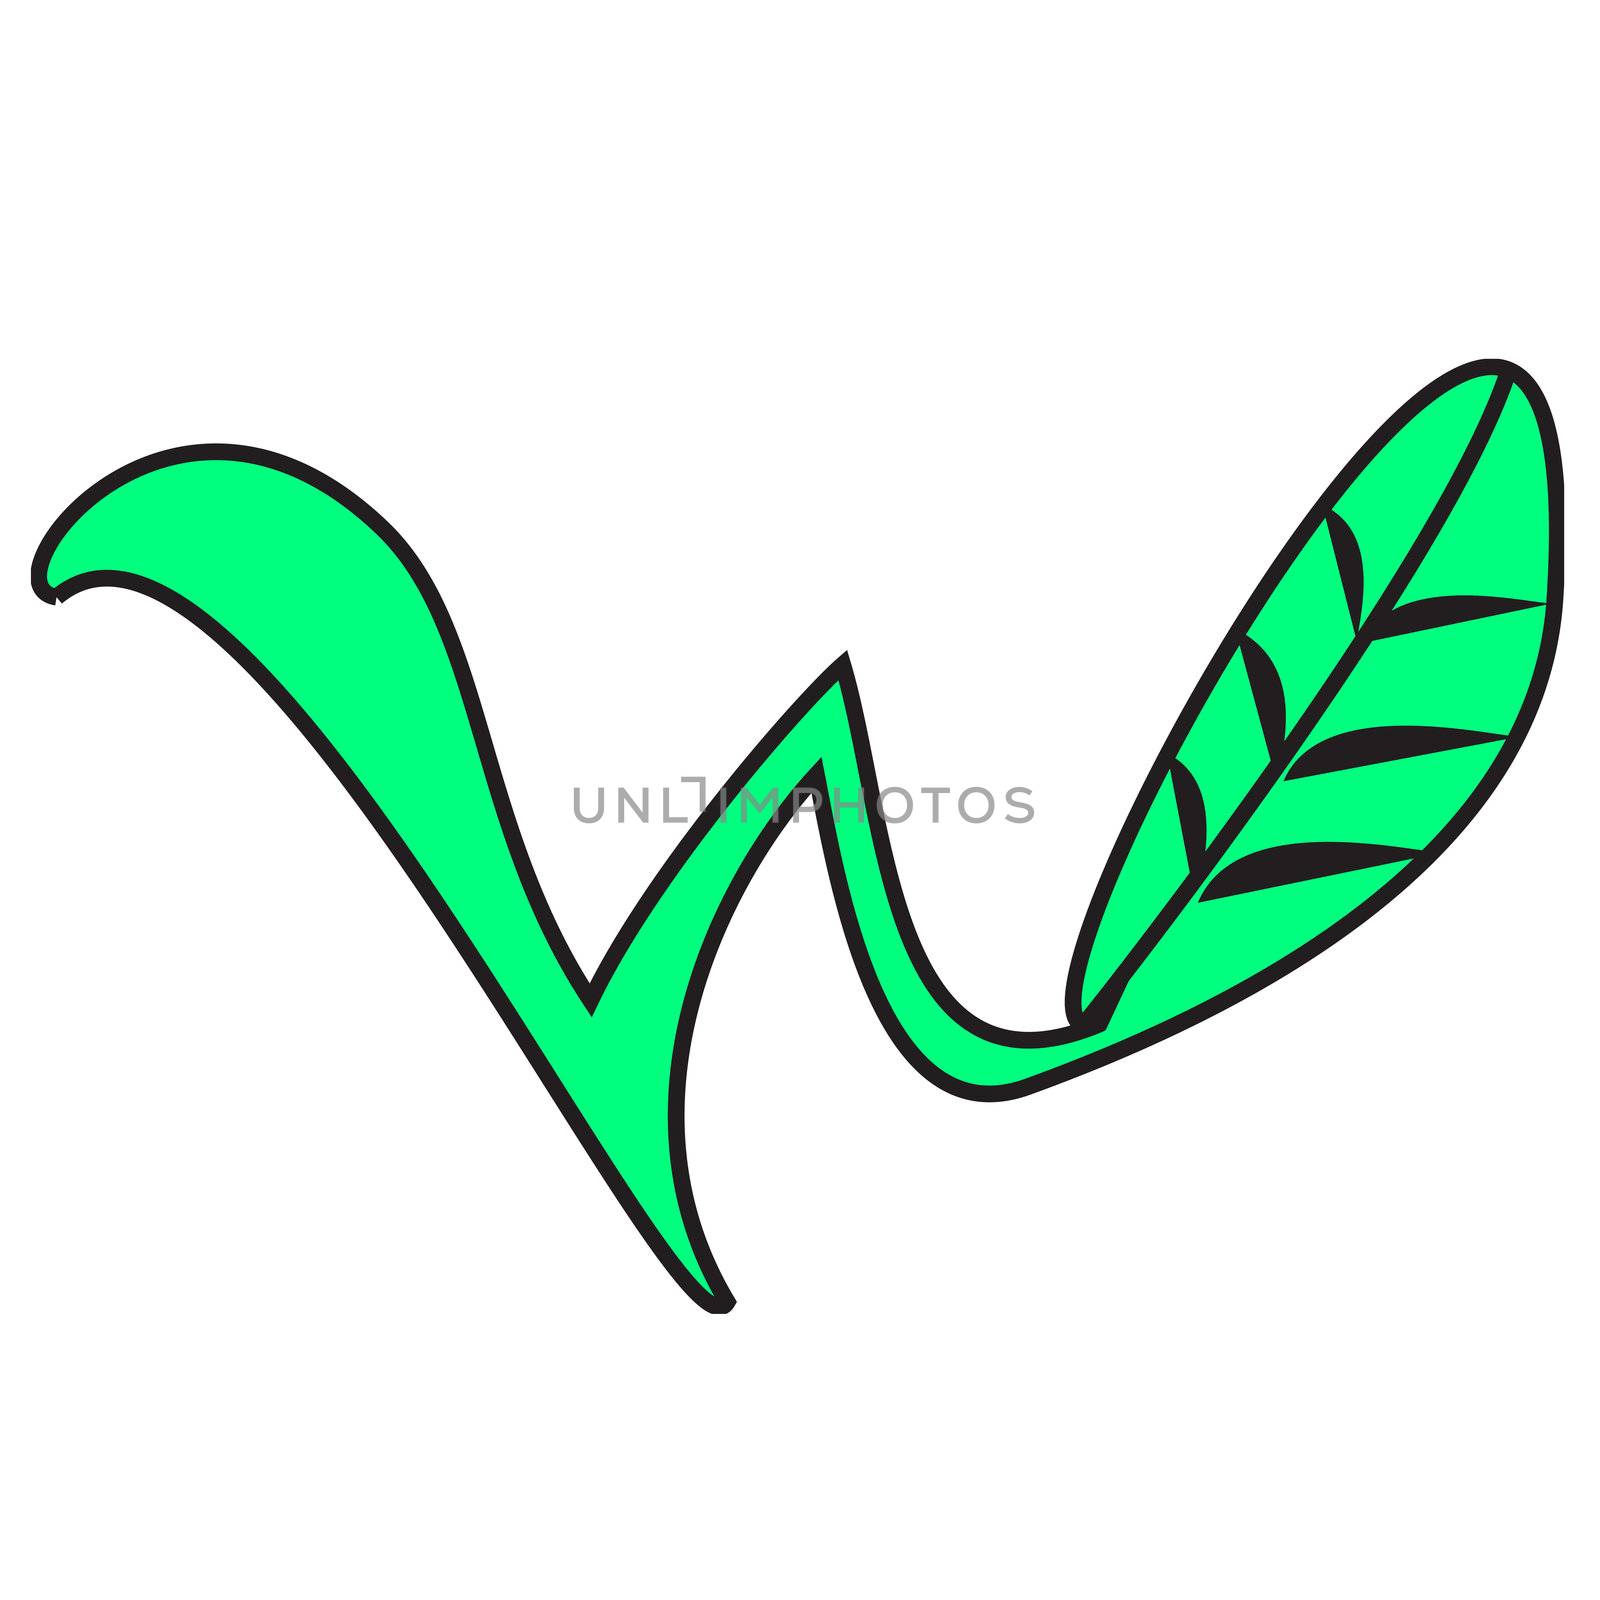 a "w" shaped plat / leaf